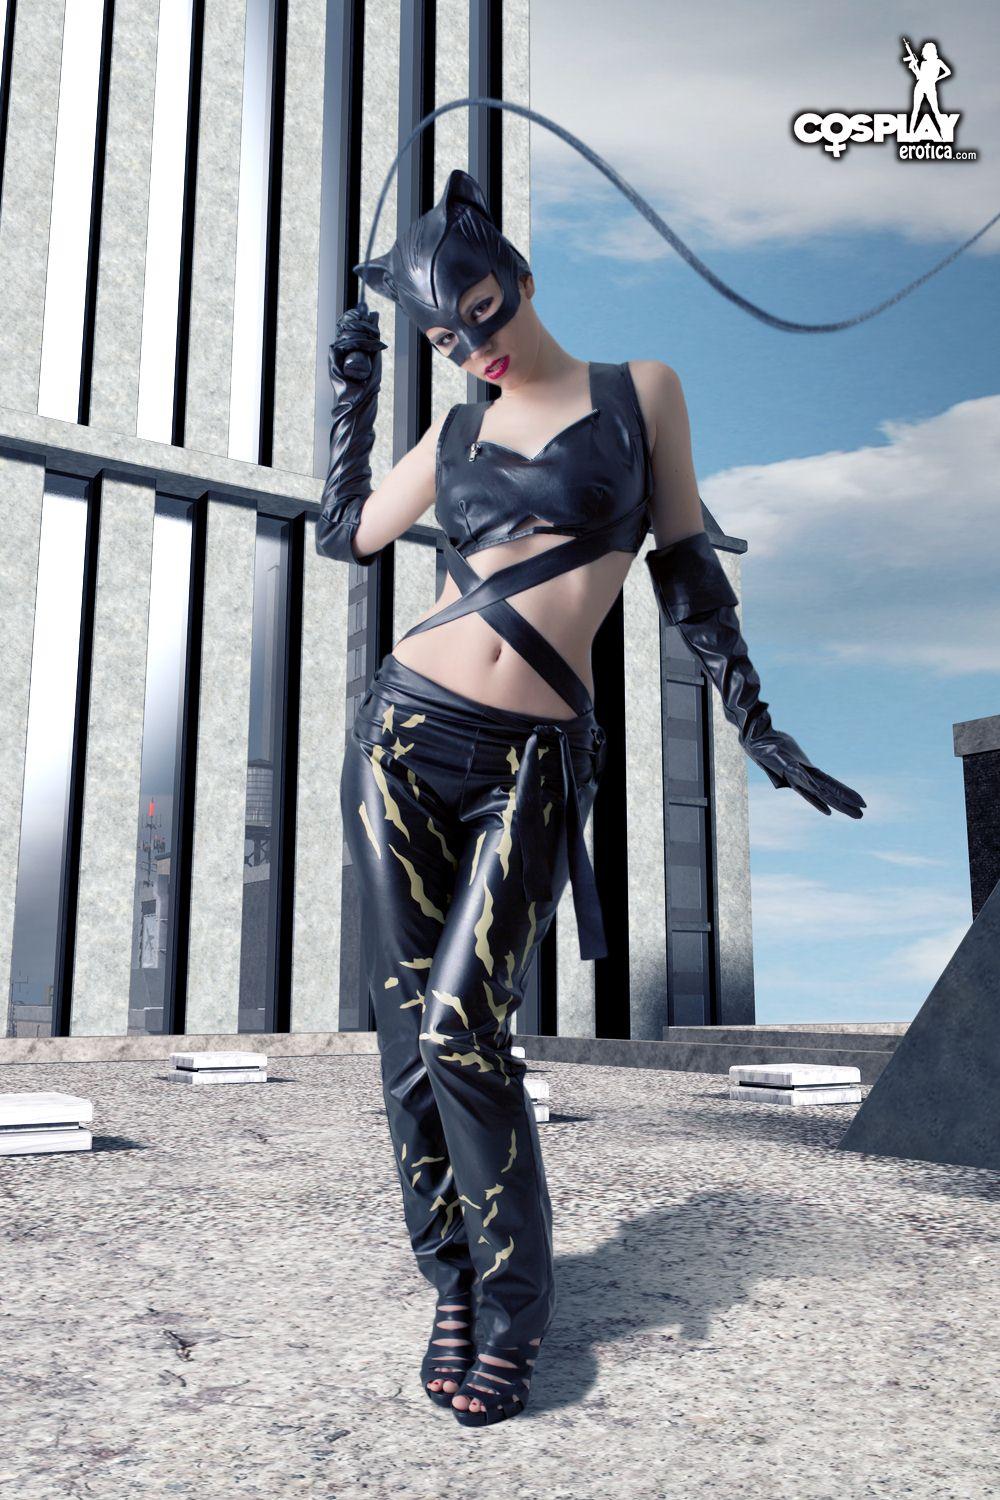 Sexy cosplayer cassie si veste come catwoman
 #53704101